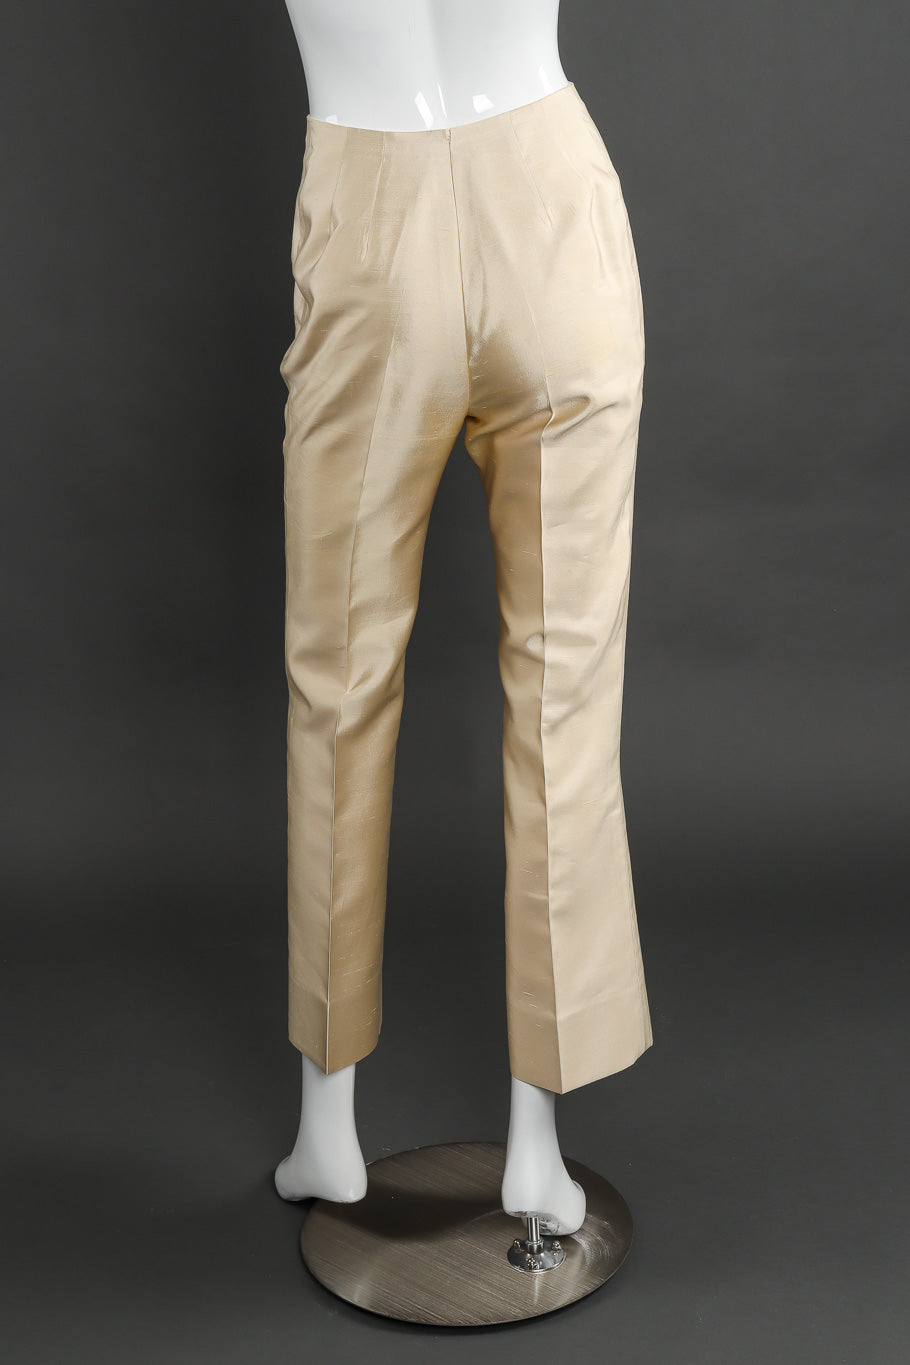 Silk set by Dynasty on mannequin pants back @recessla